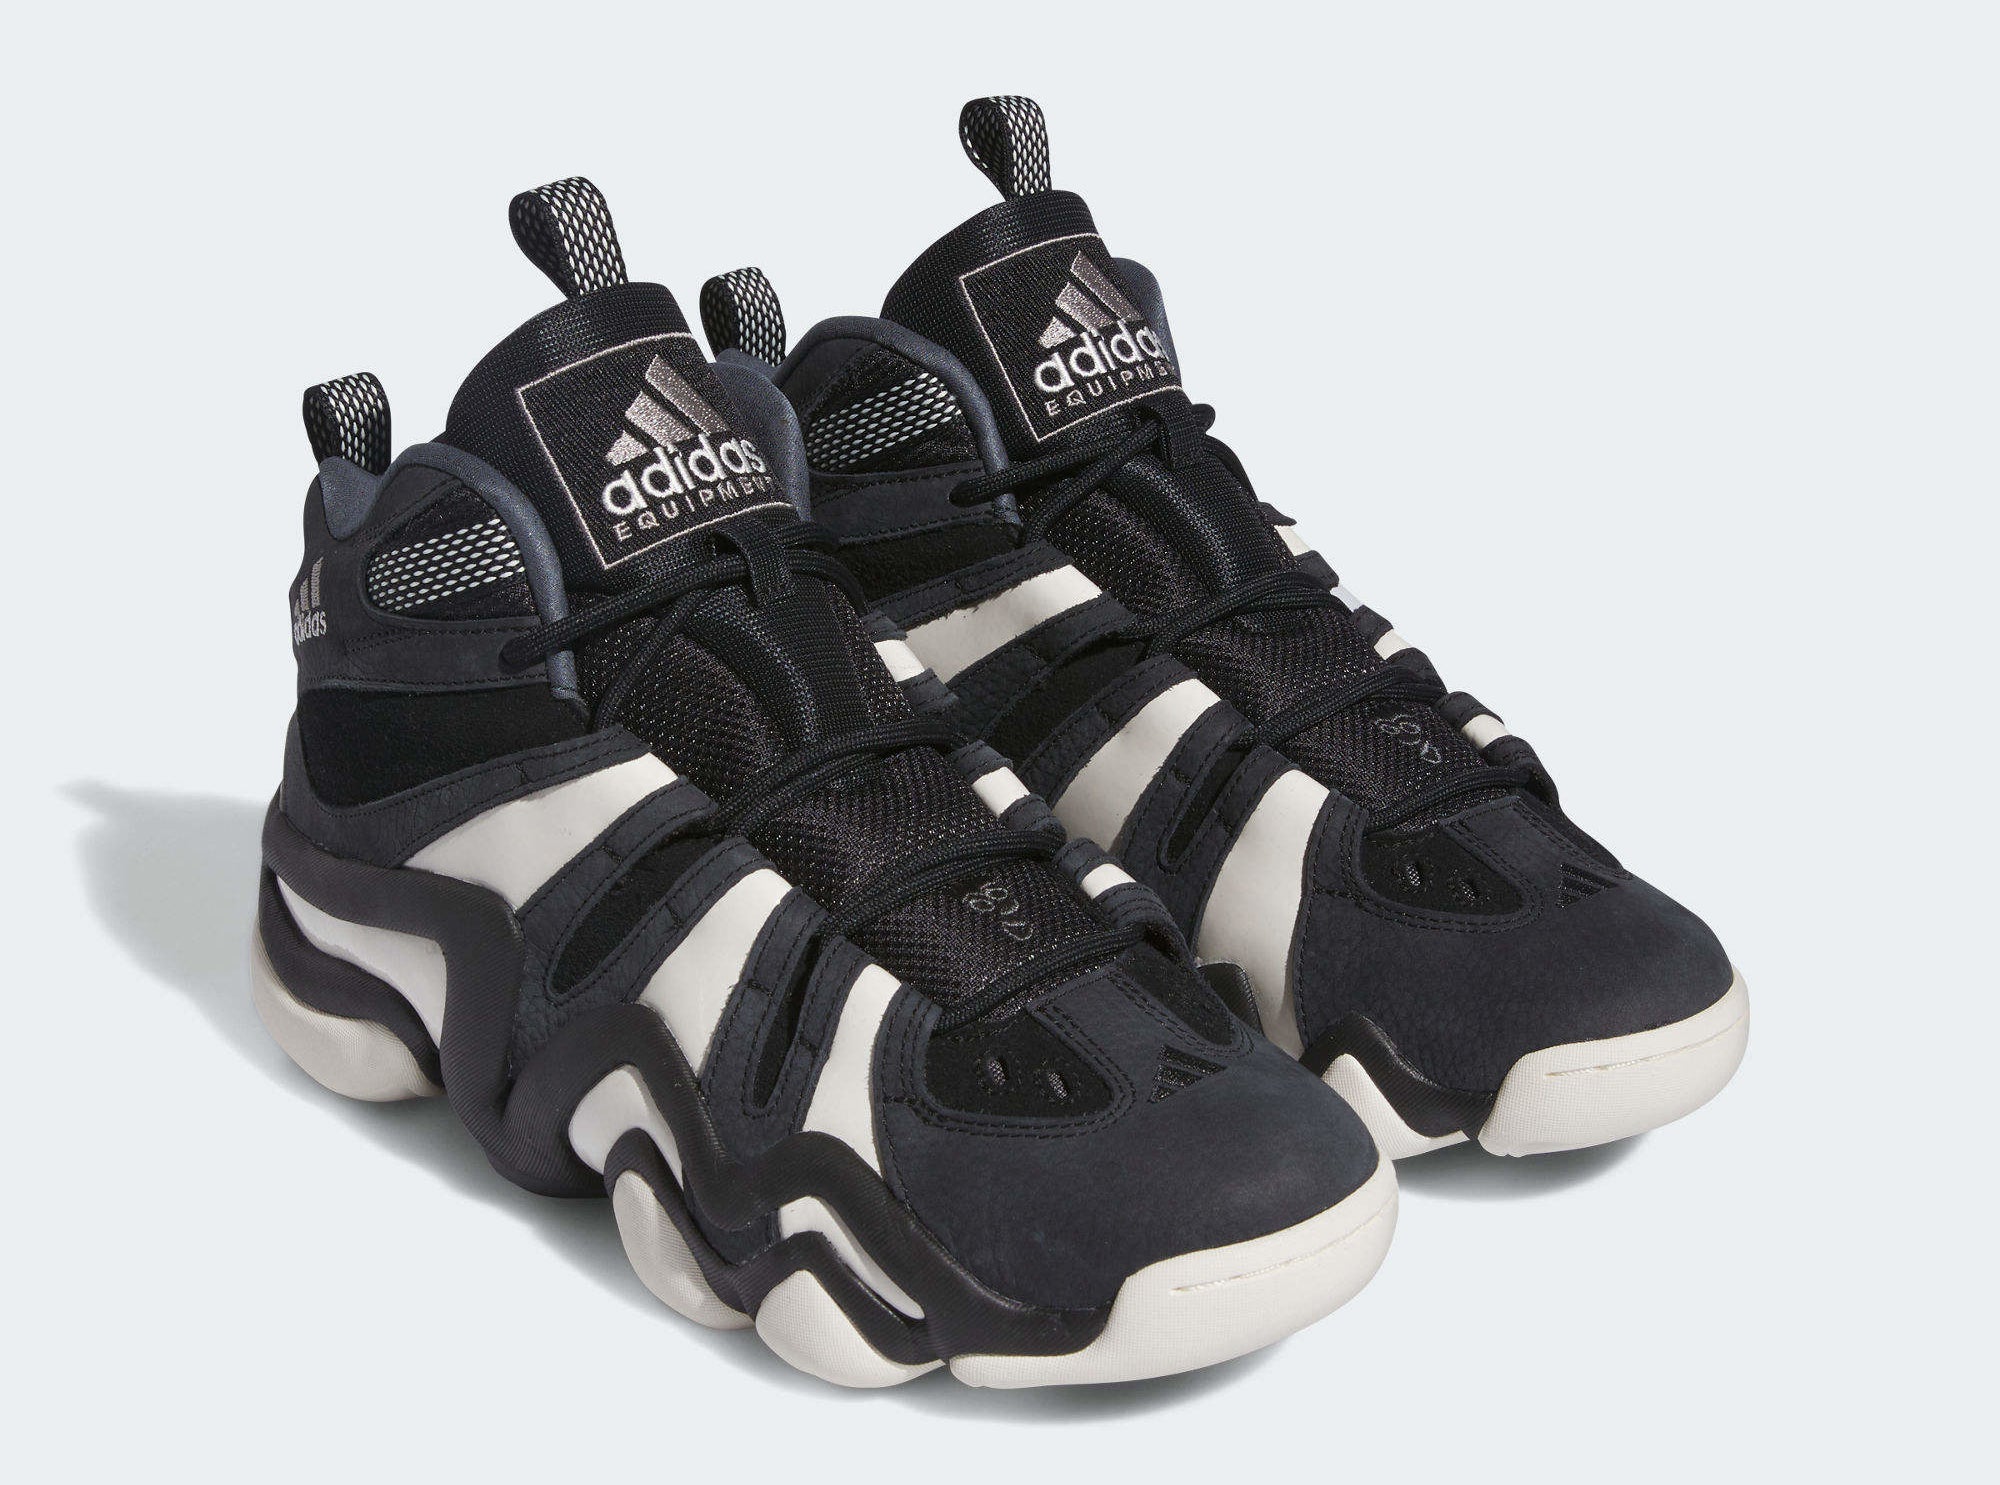 Adidas Crazy 8 Kobe Bryant Signature Sneaker Release Date | Complex